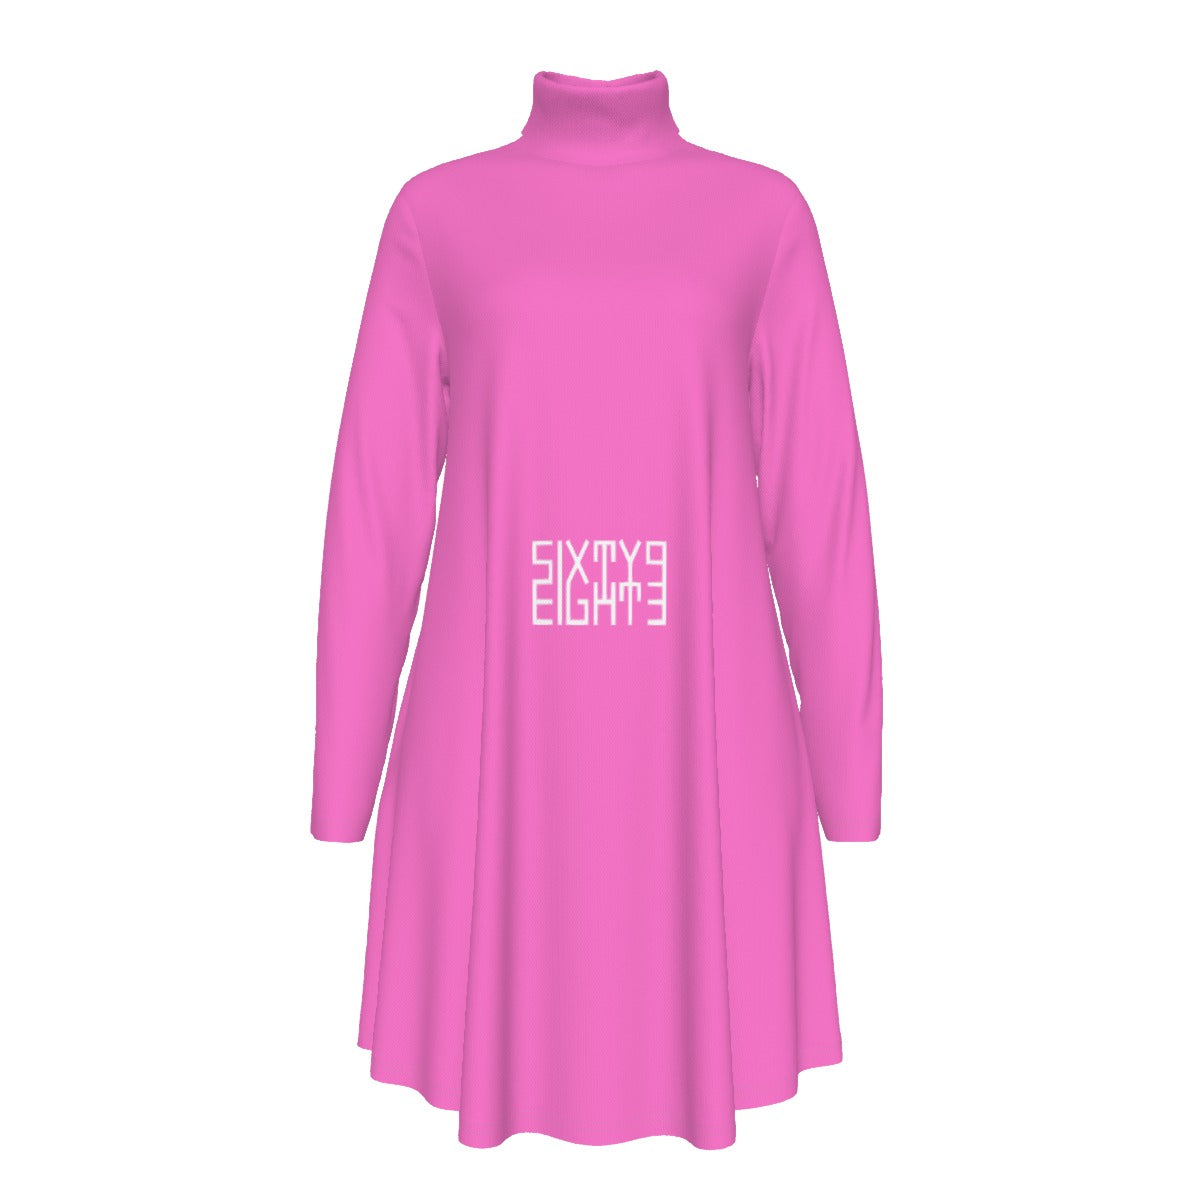 Sixty Eight 93 Logo White Pink Women's High Neck Long Sleeve Dress #24